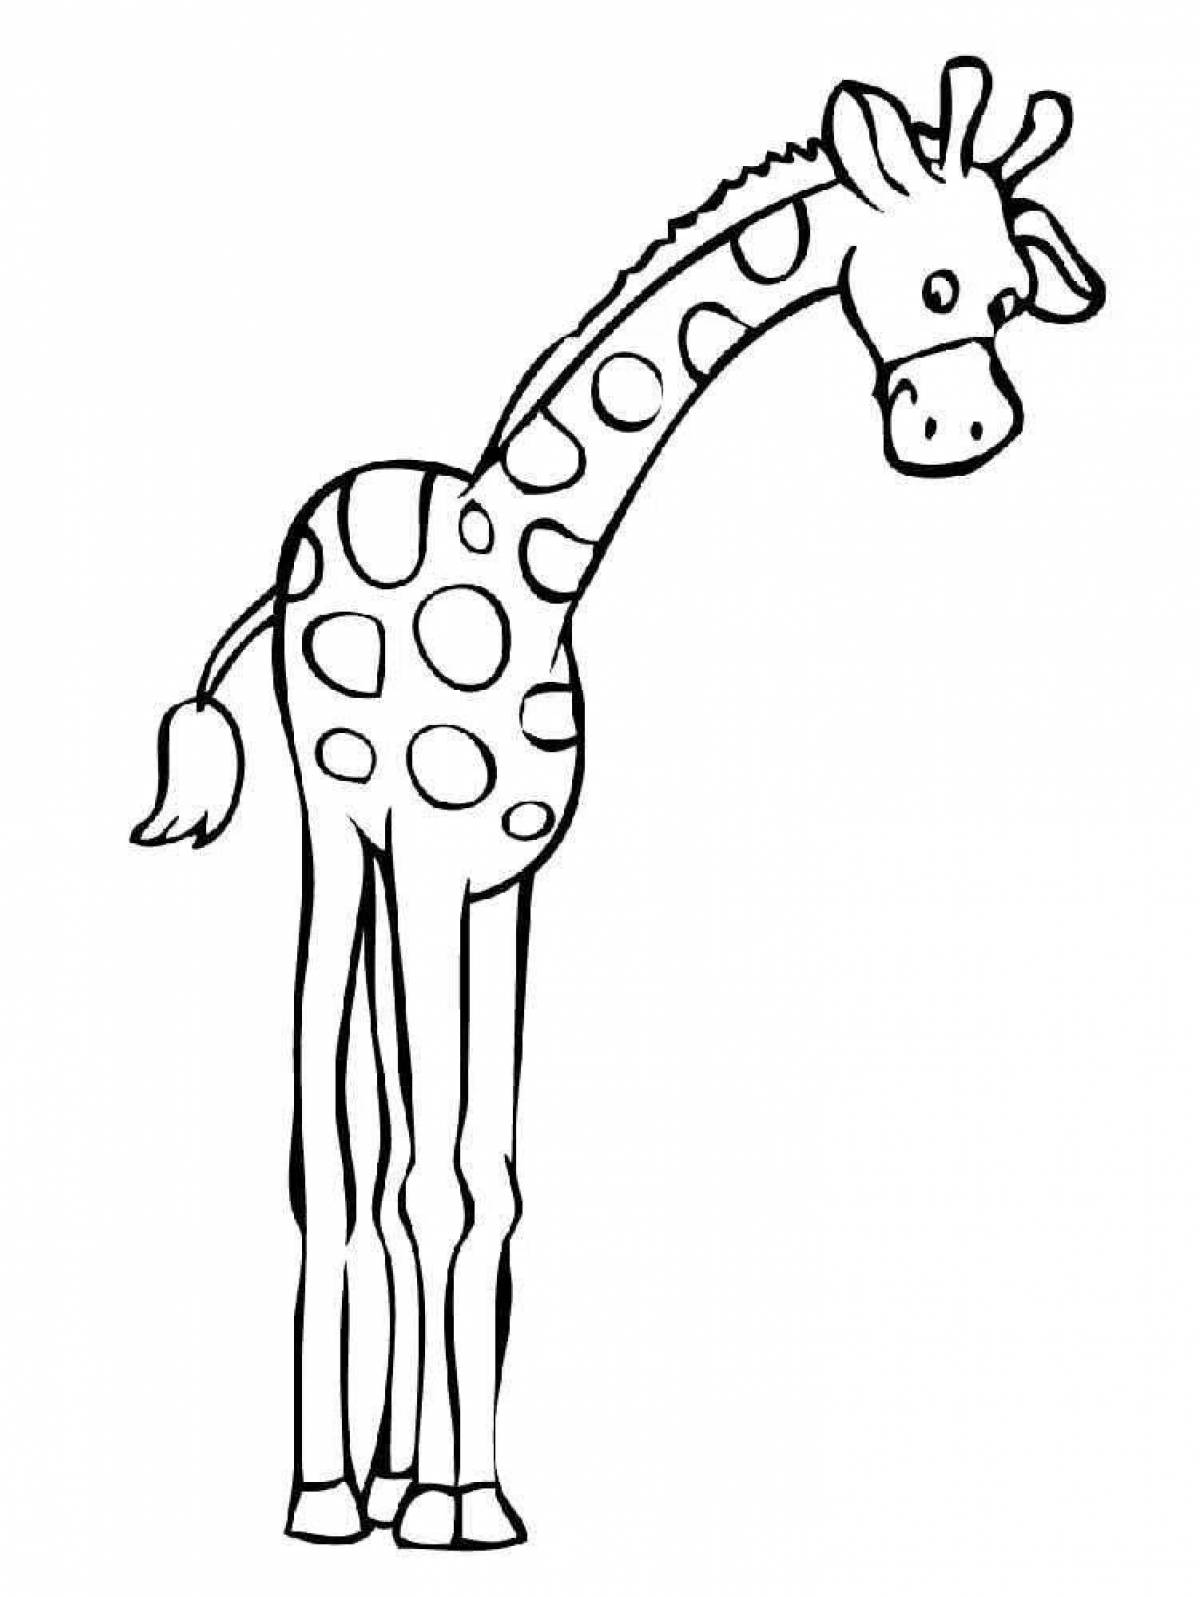 Delightful drawing of a giraffe